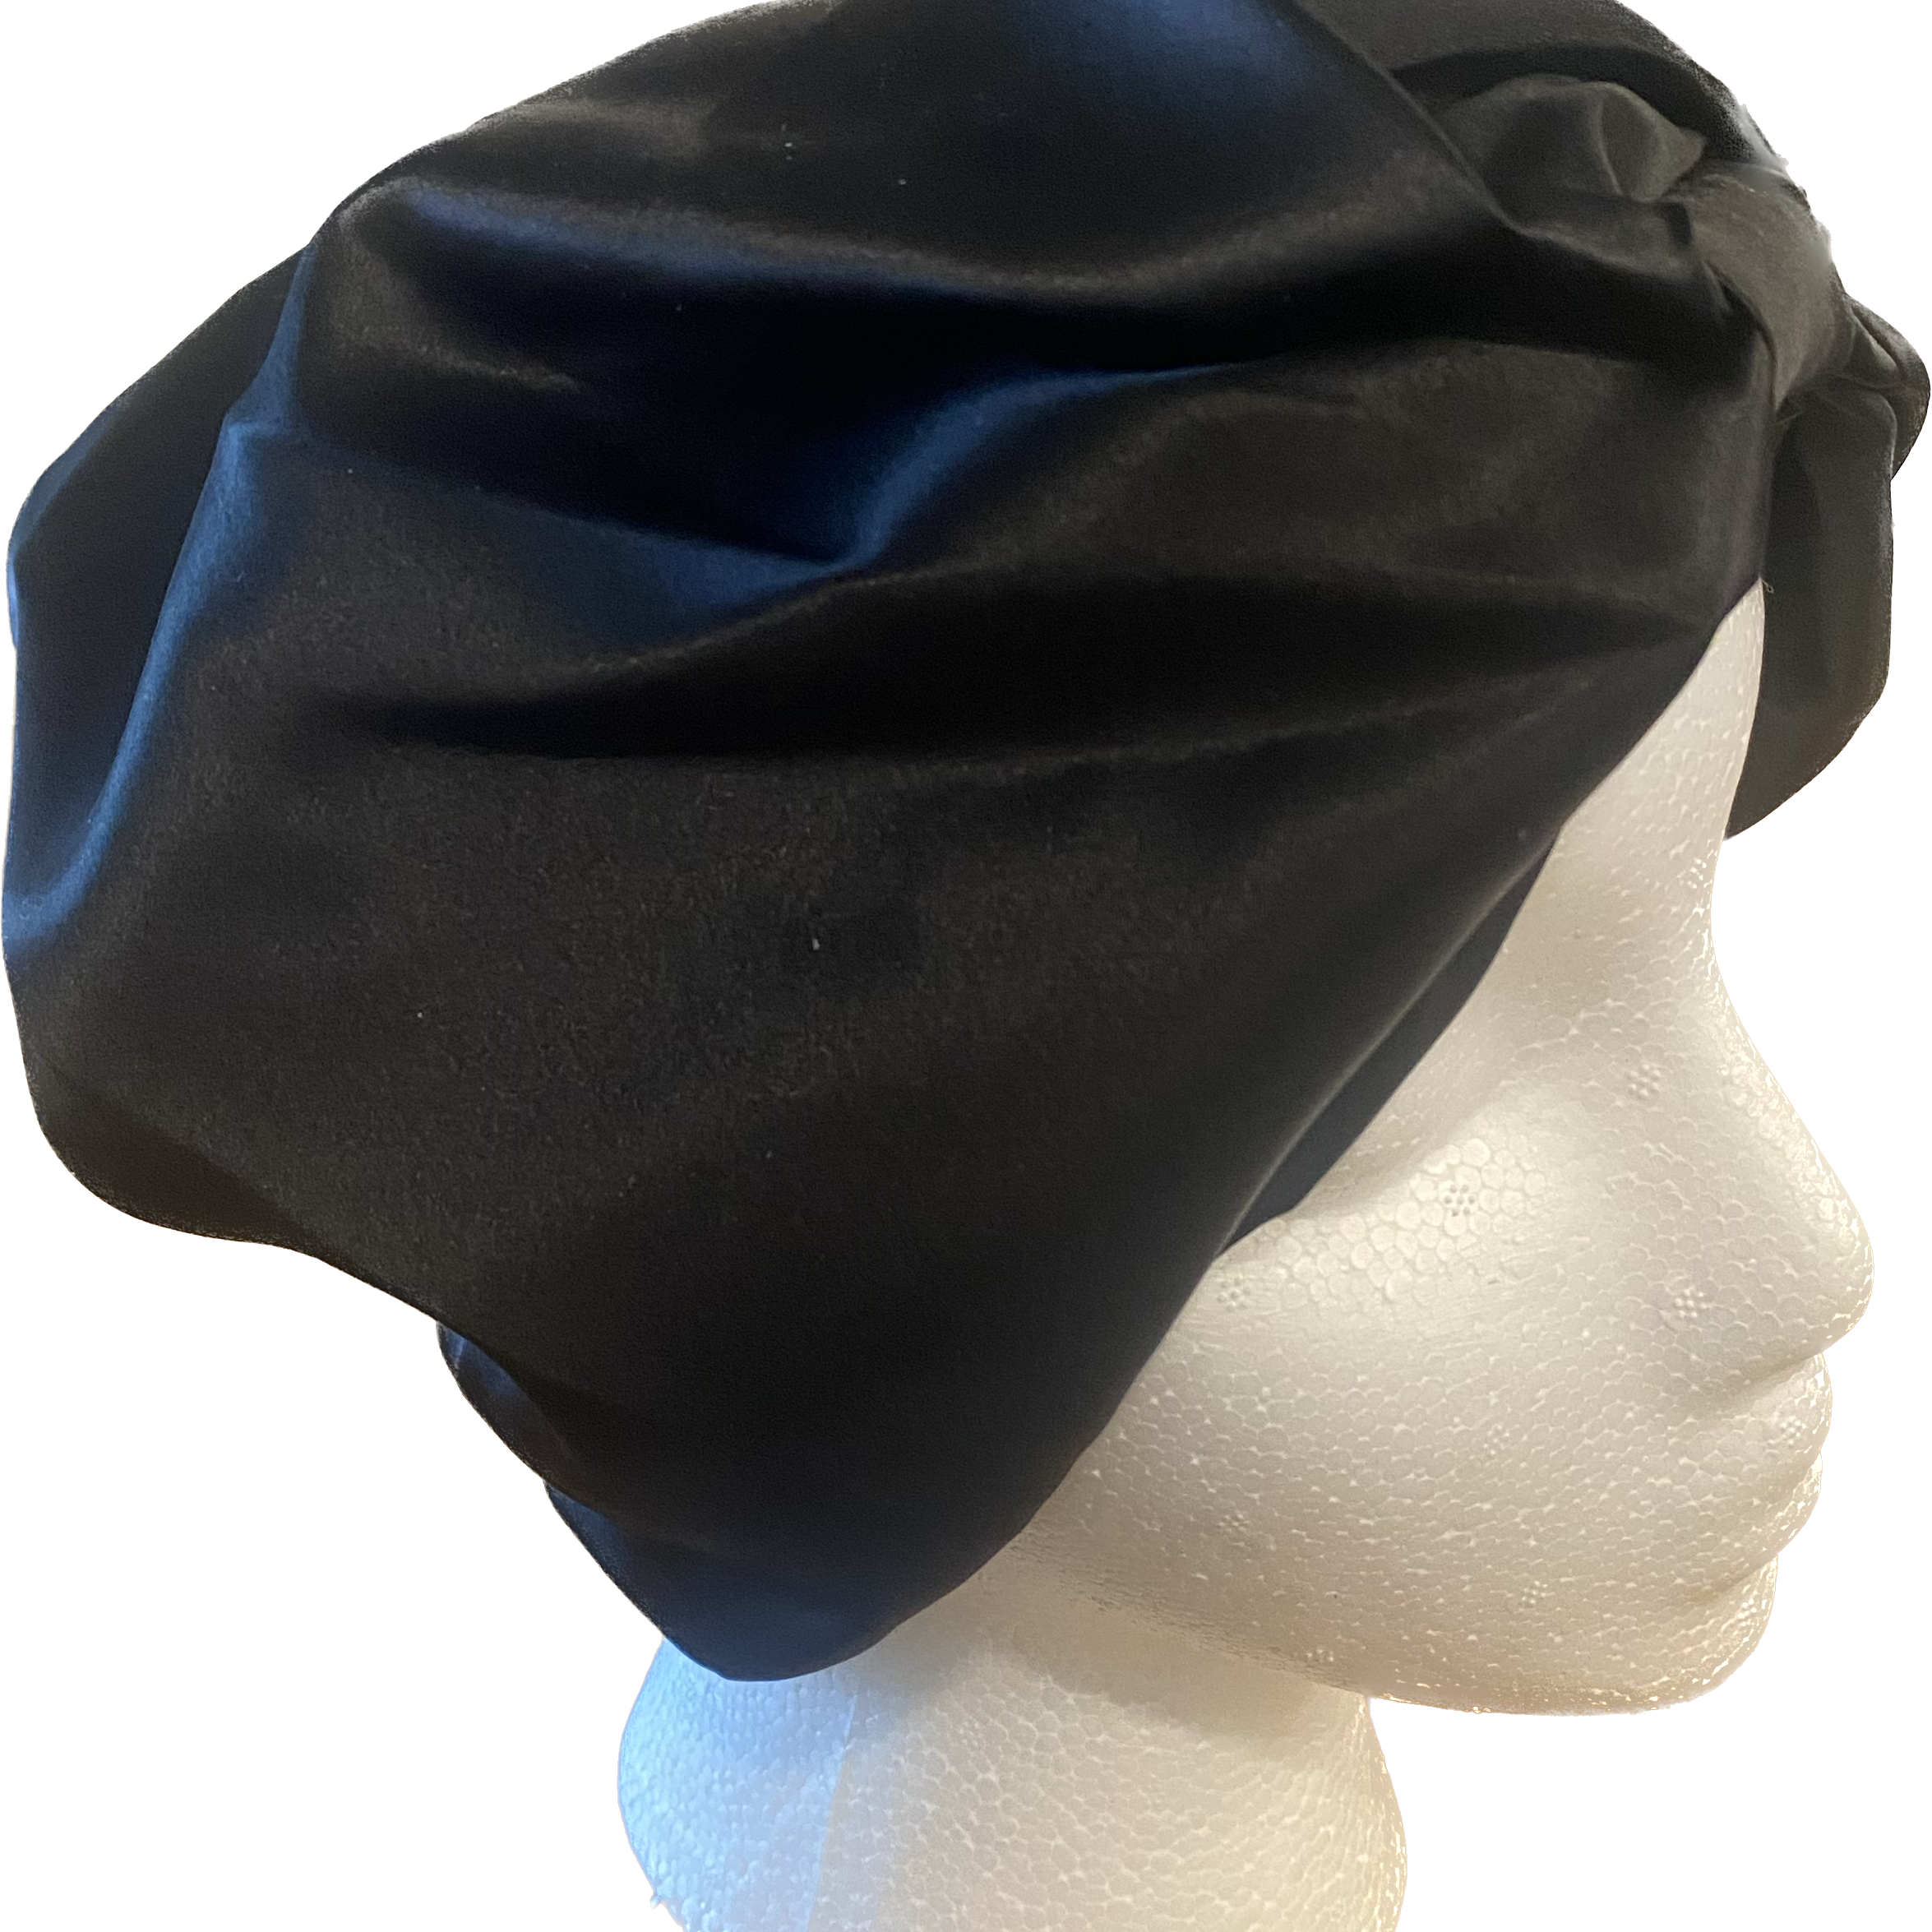  Black Square Silk Night Cap/Bonnet - Black Square Silk Night Cap/Bonnet -  -  - fine silk products by Forsters Finery